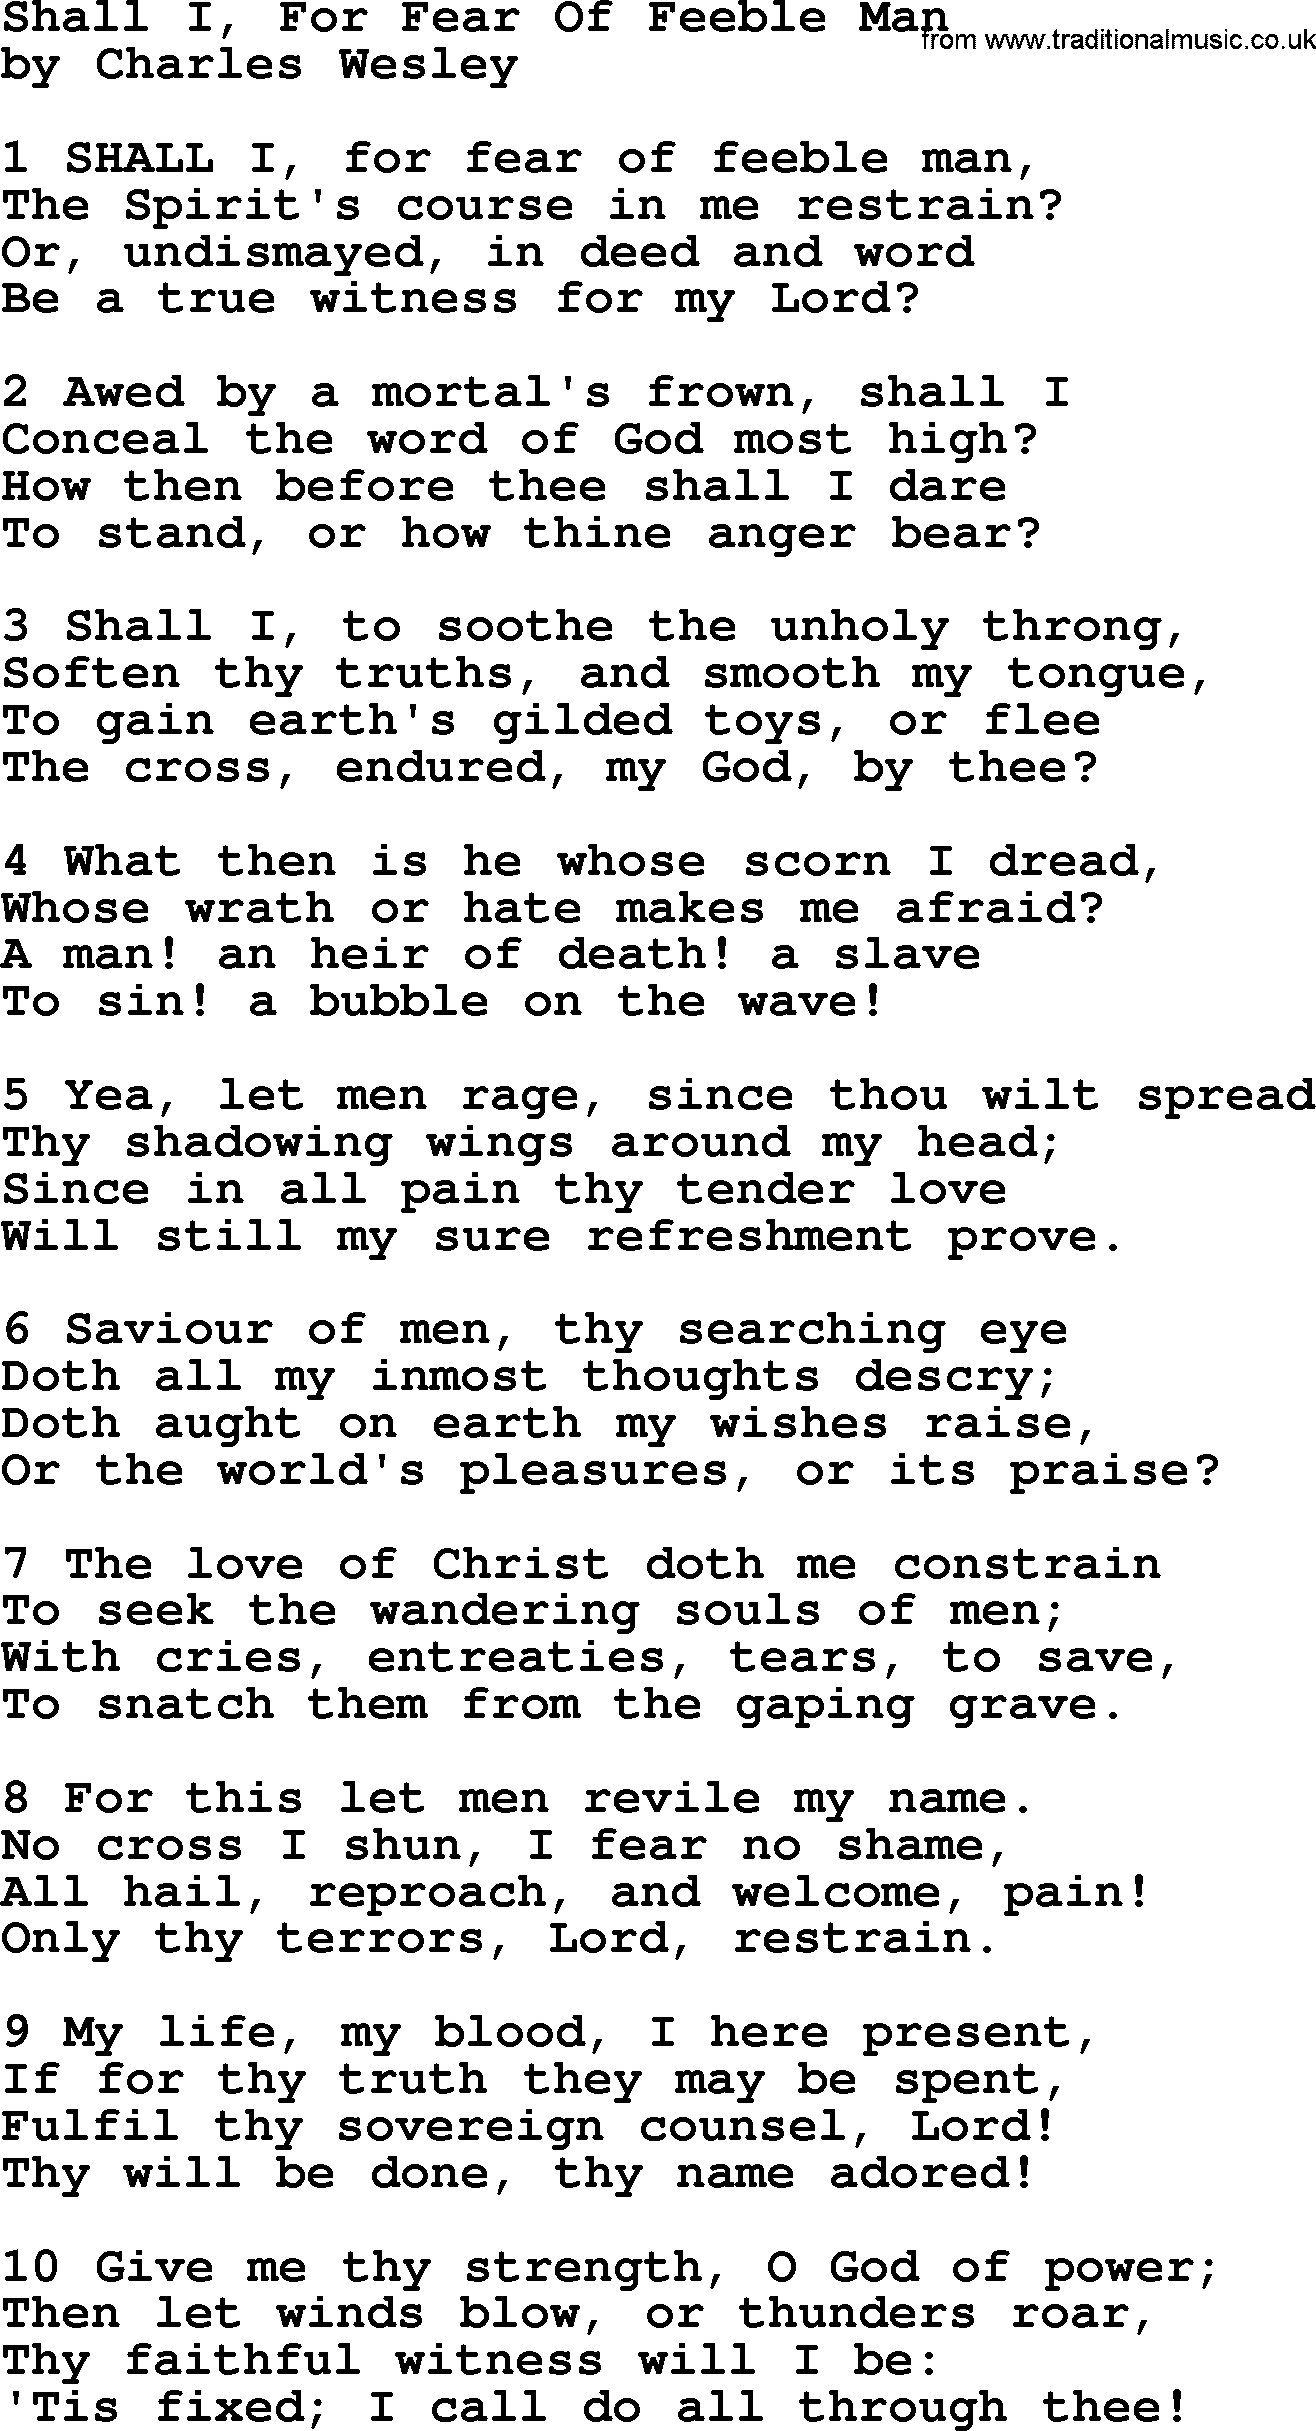 Charles Wesley hymn: Shall I, For Fear Of Feeble Man, lyrics